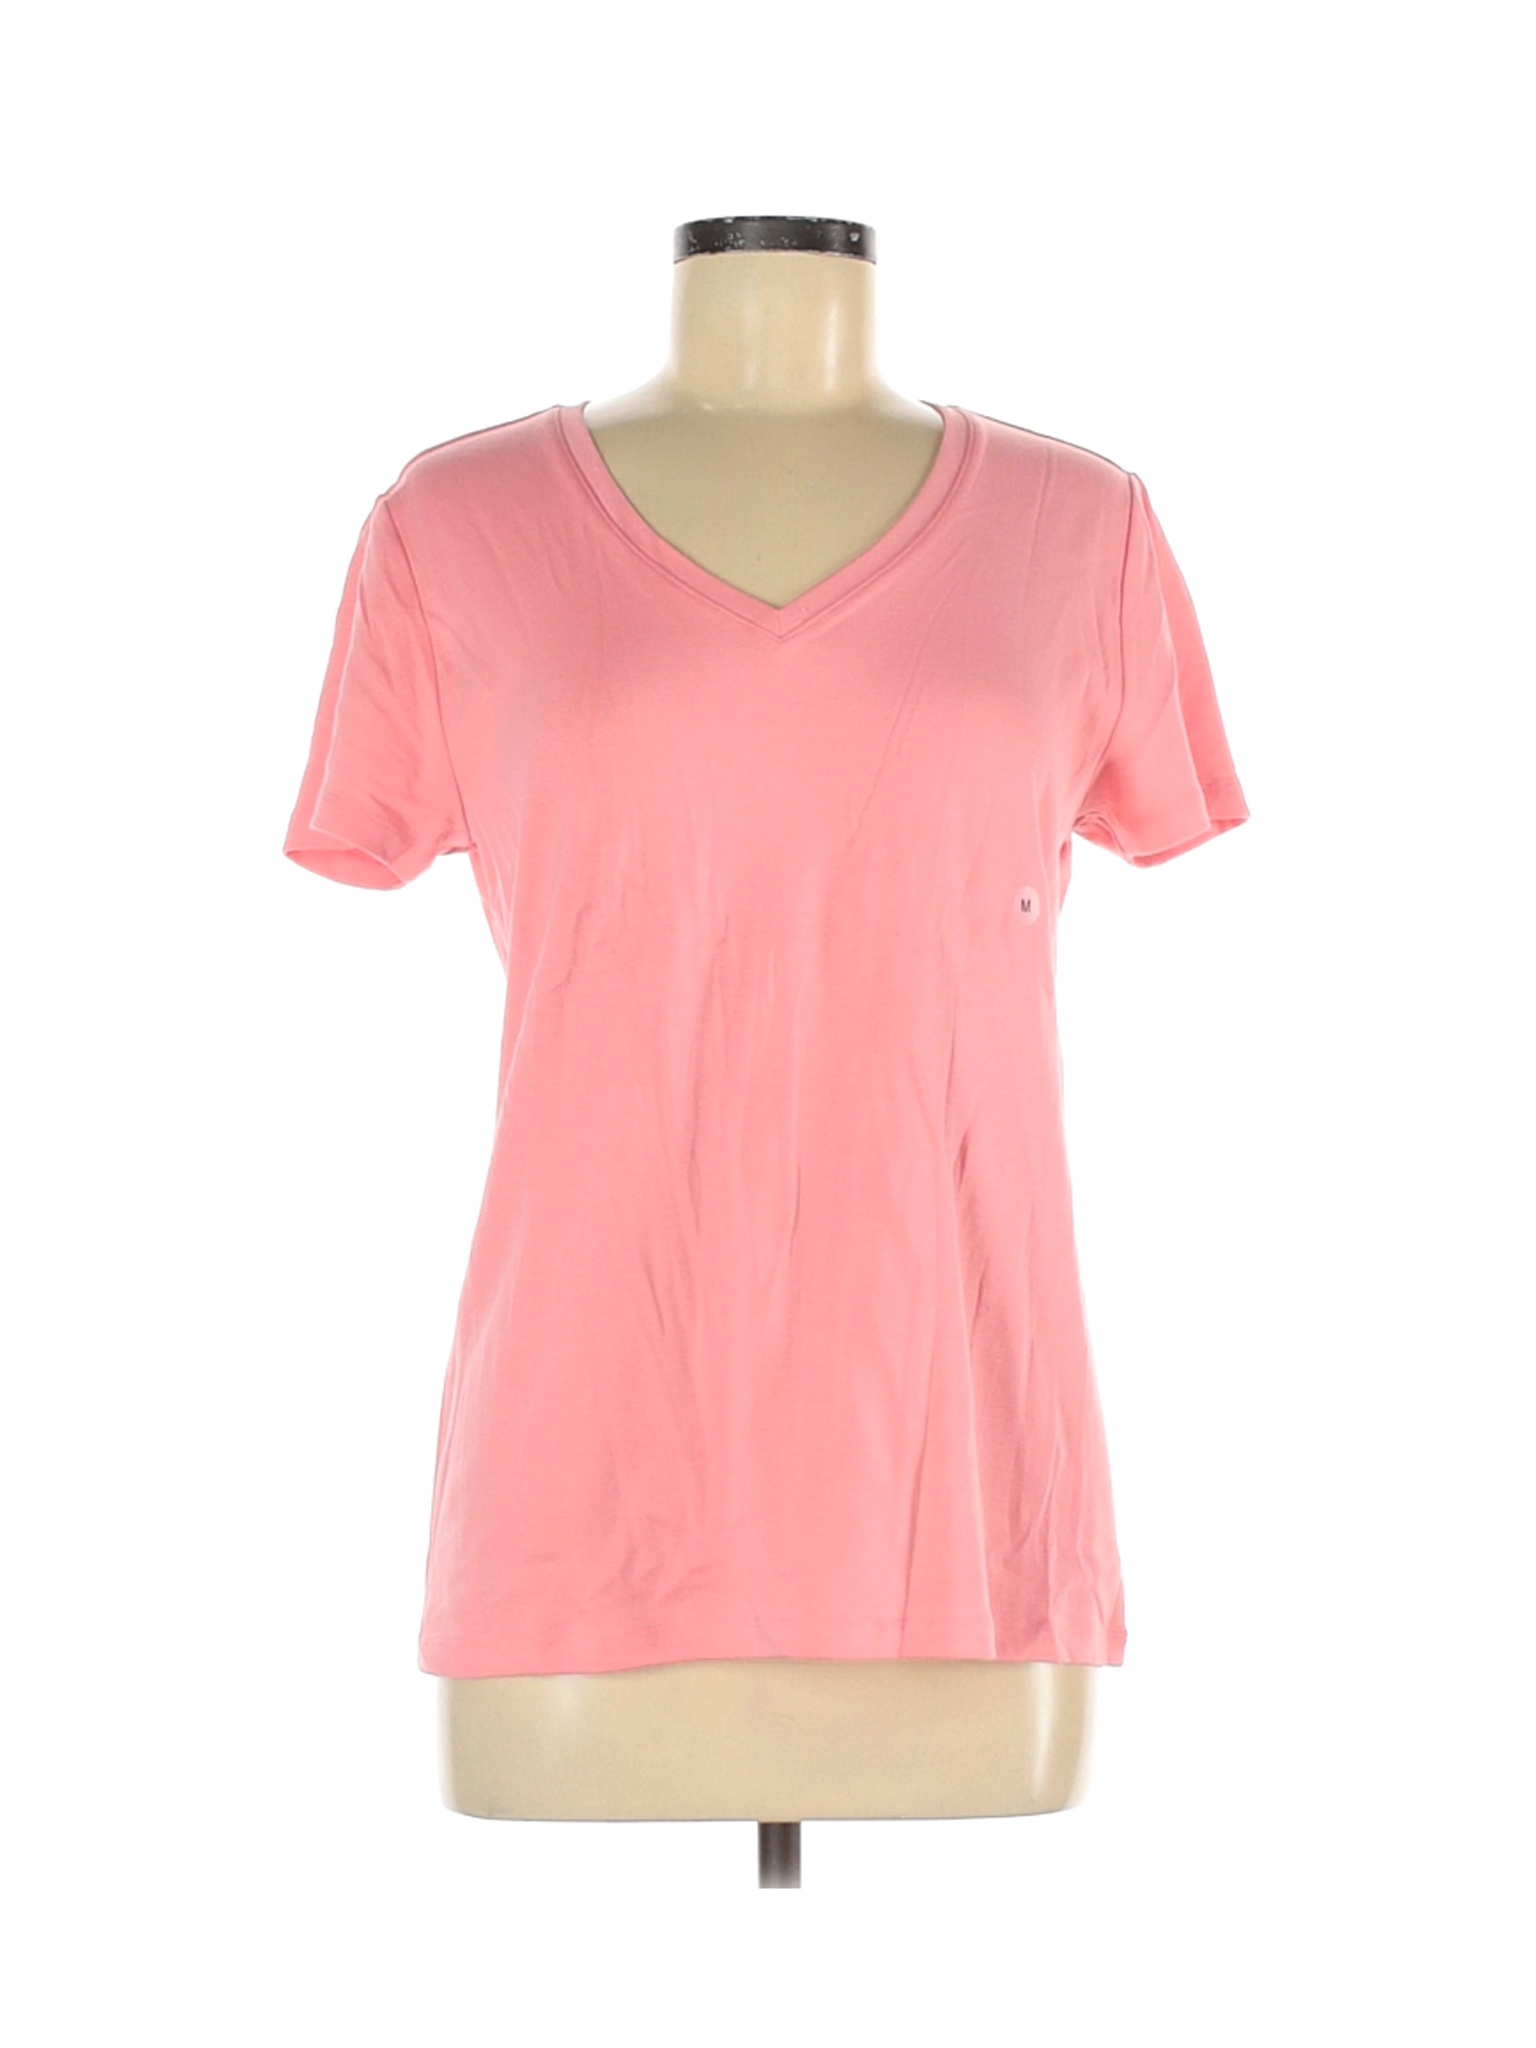 Preswick & Moore Women Pink Short Sleeve T-Shirt M | eBay